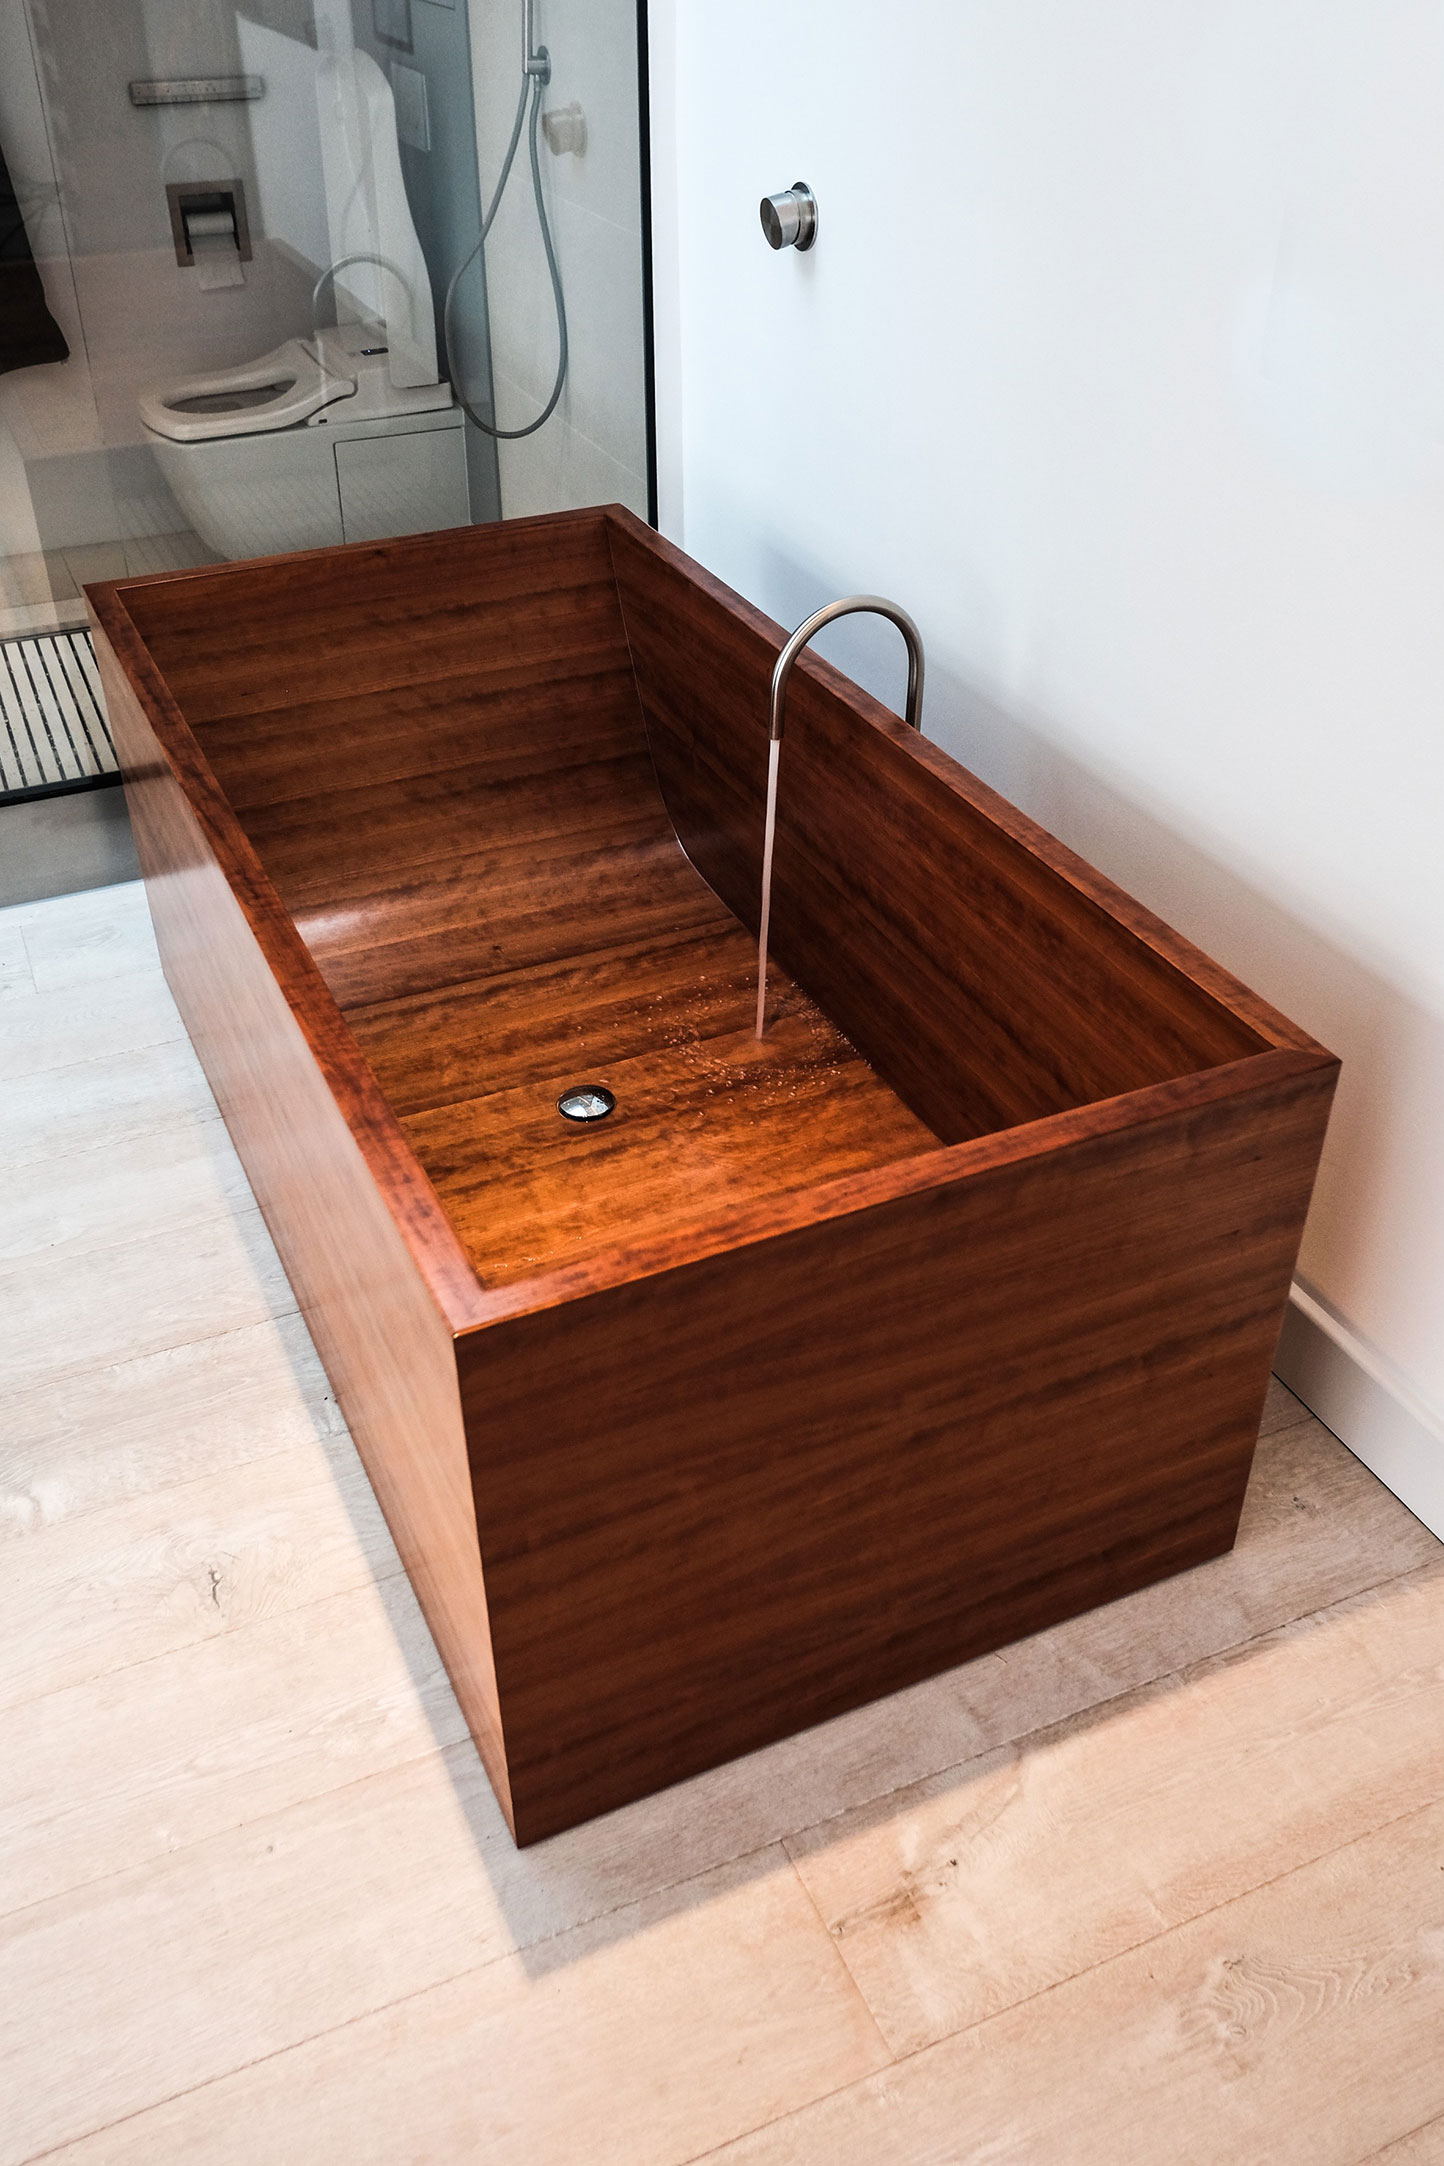 Image no. 3 of Ofuro wooden bathtub in American Cherry wood - London Cherry